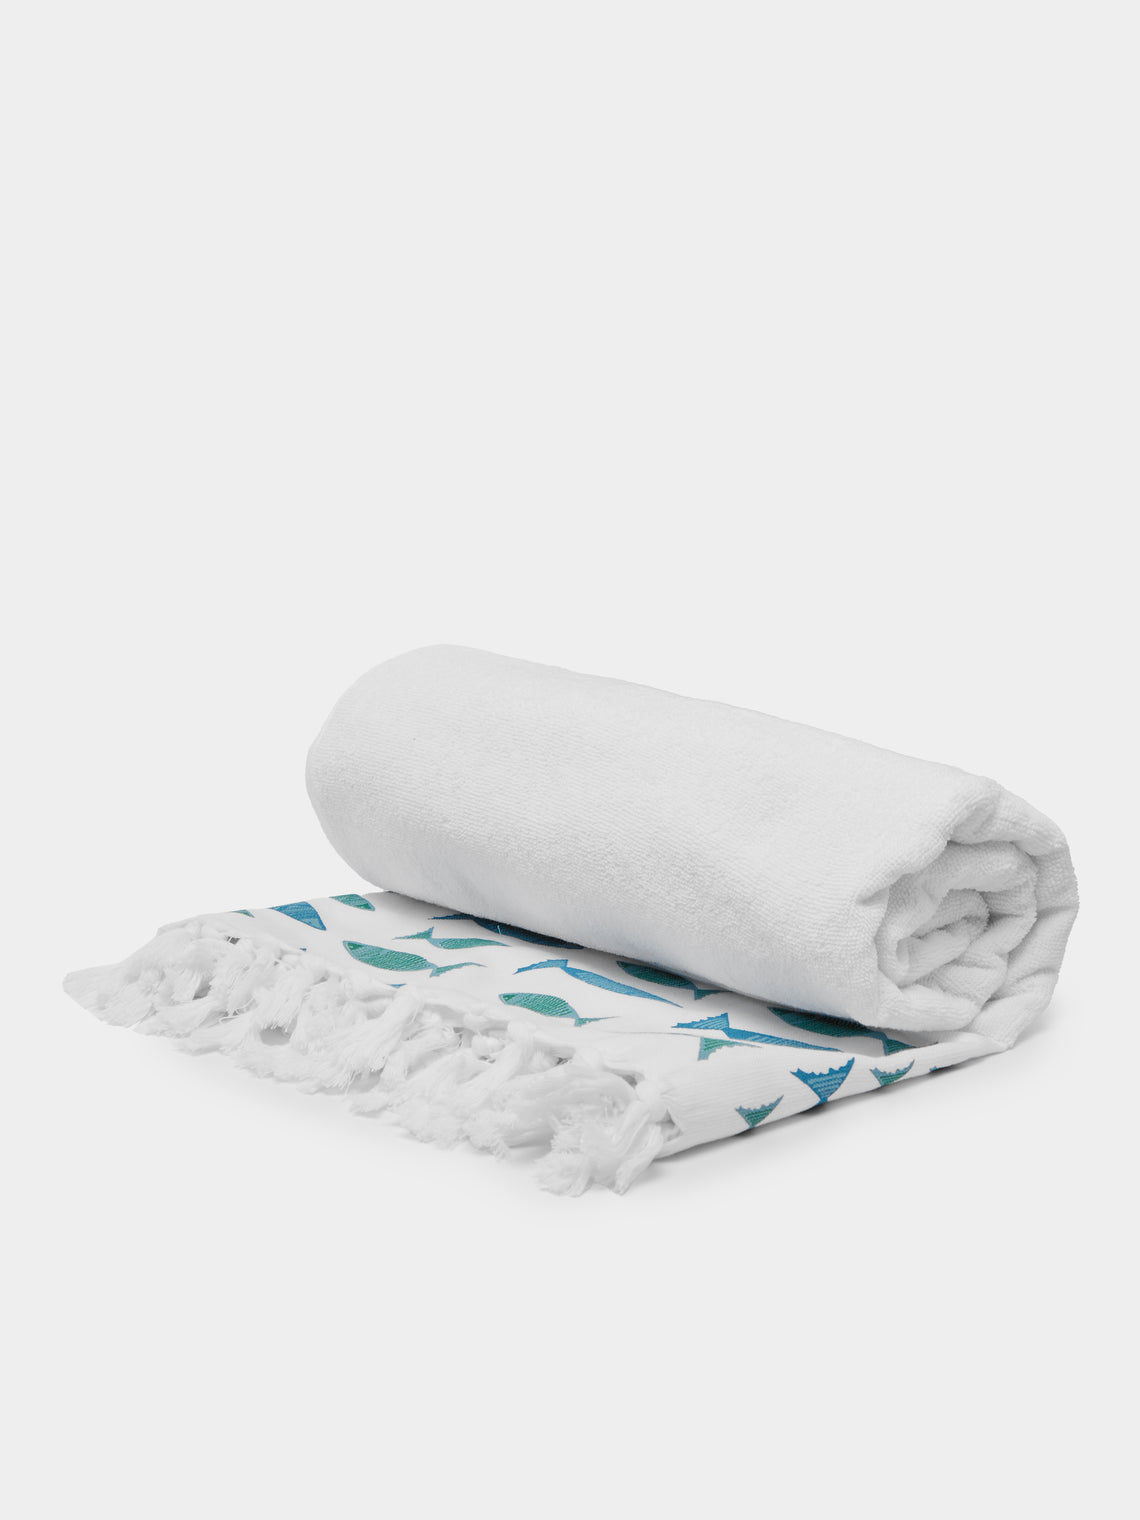 Malaika - Small Fish Hand-Printed Cotton Beach Towels (Set of 2) -  - ABASK